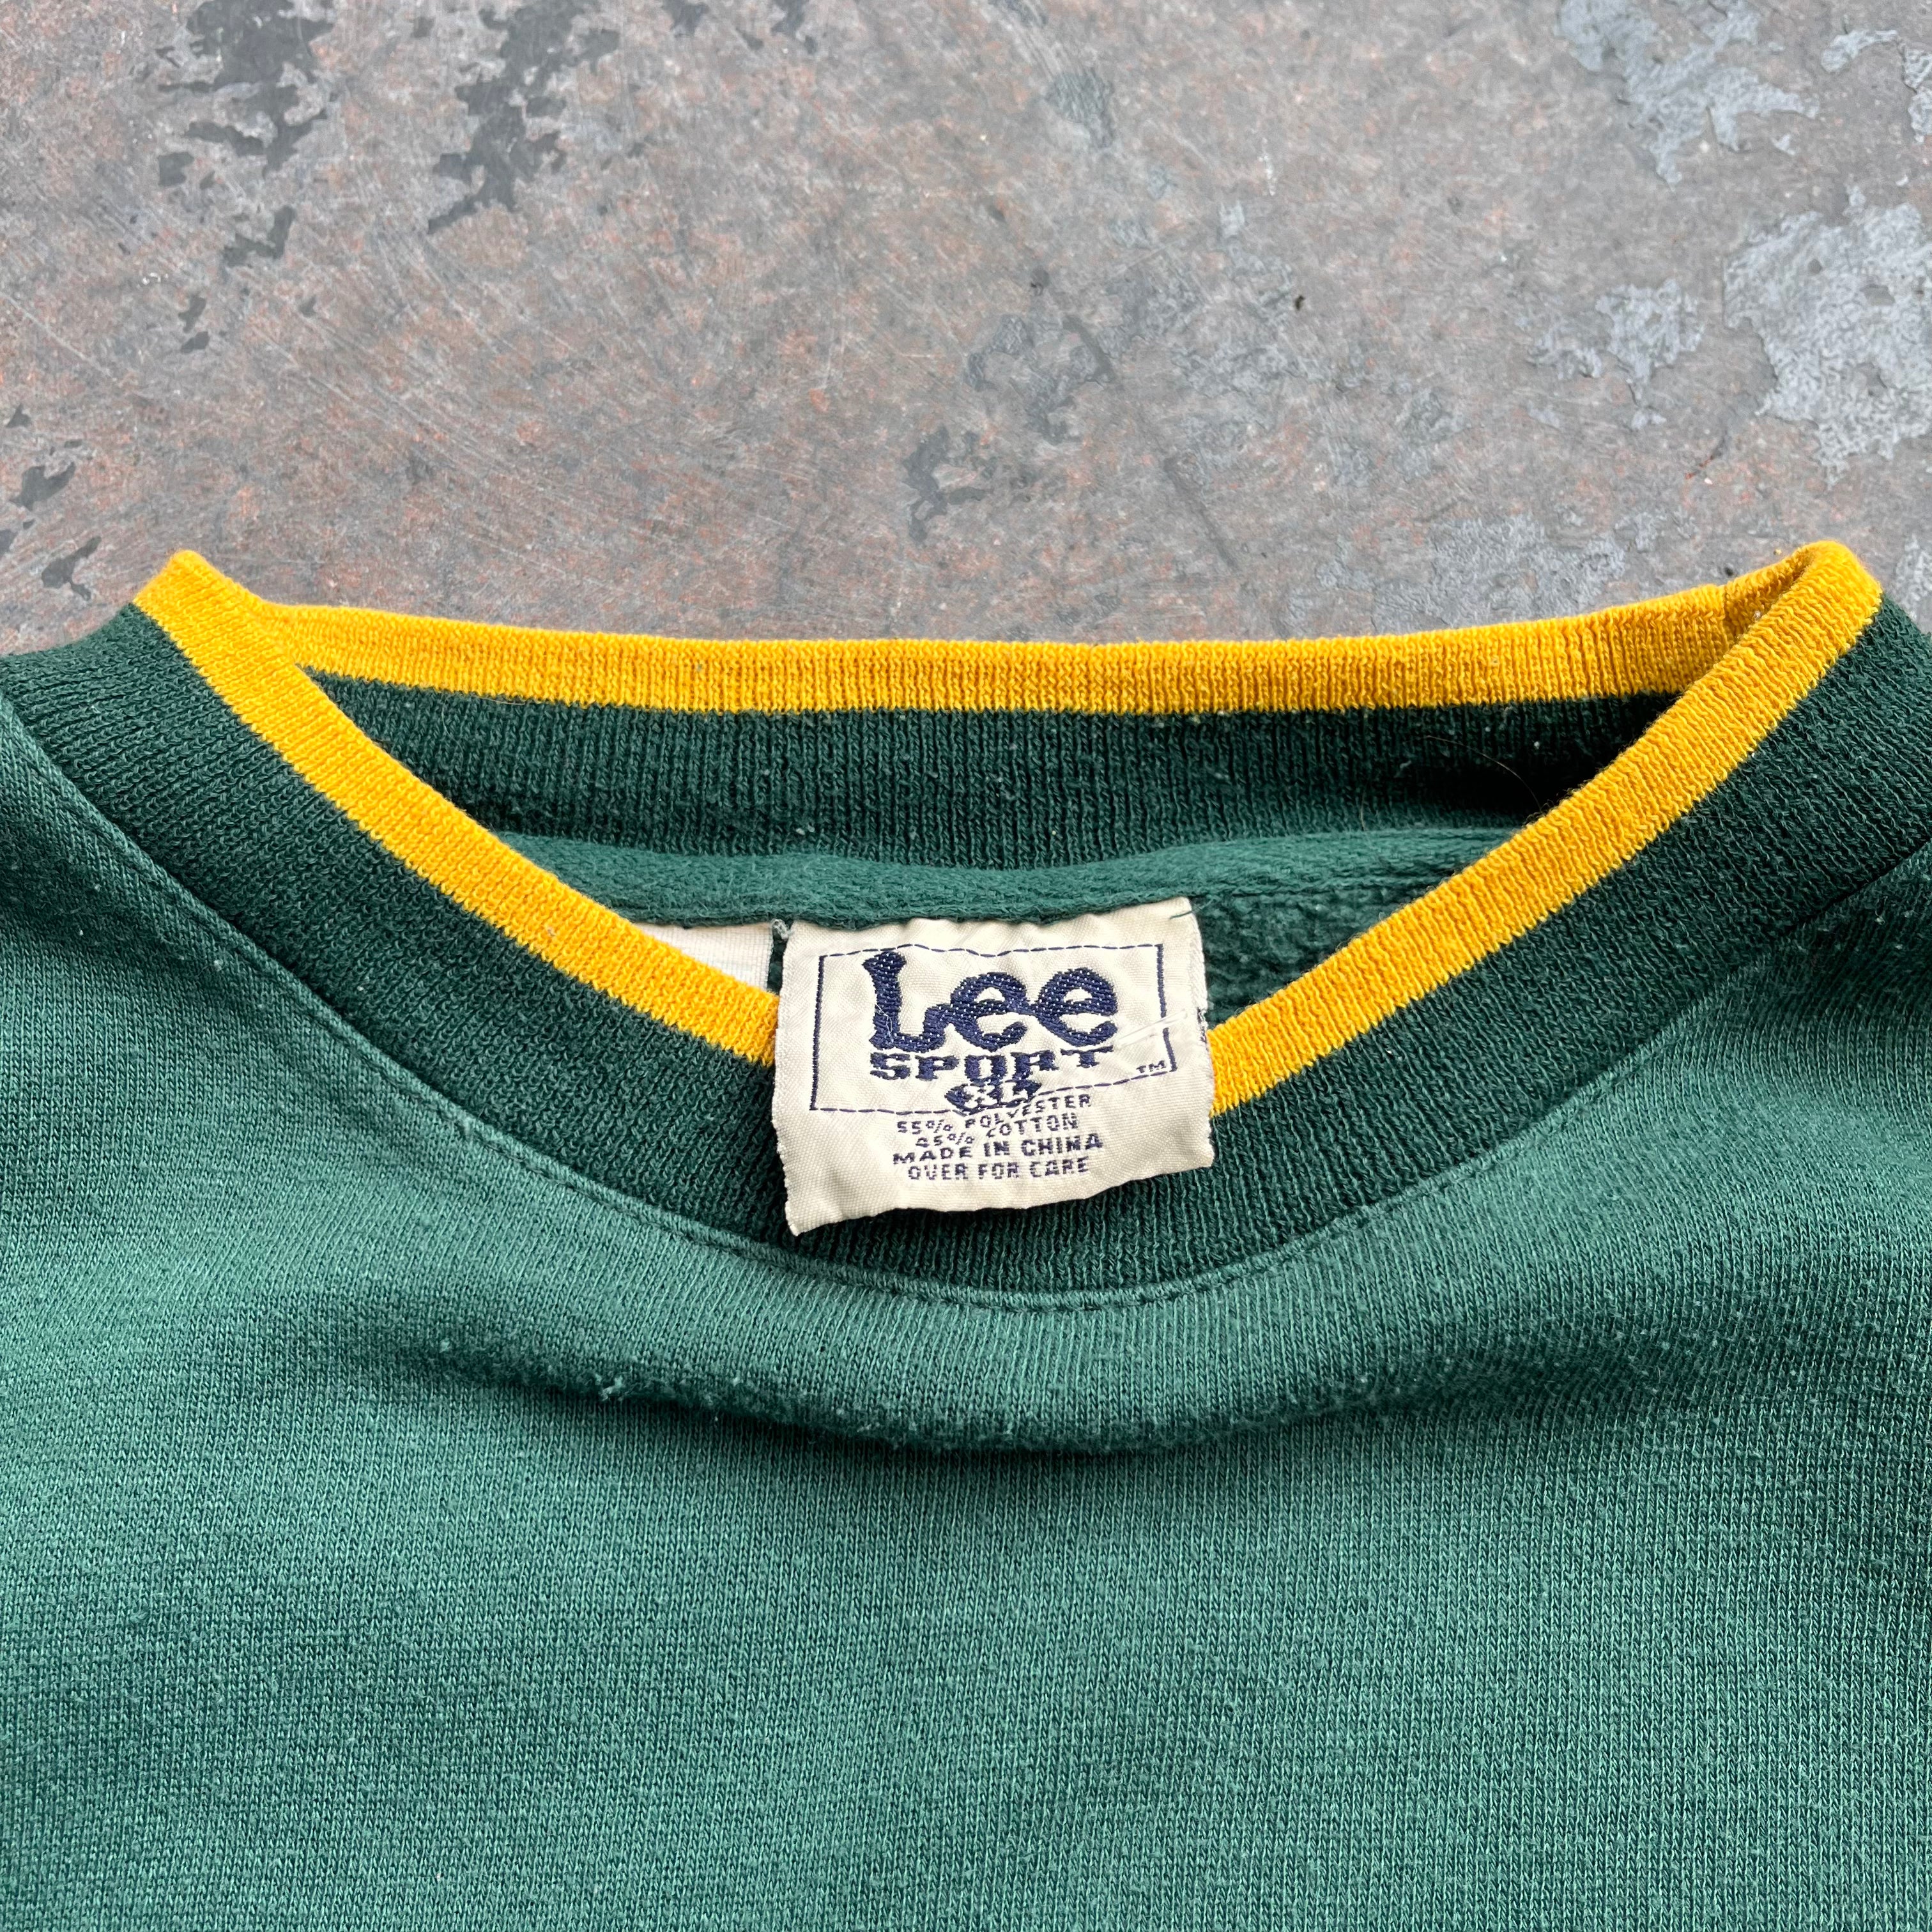 Green Bay Packers Sweatshirt